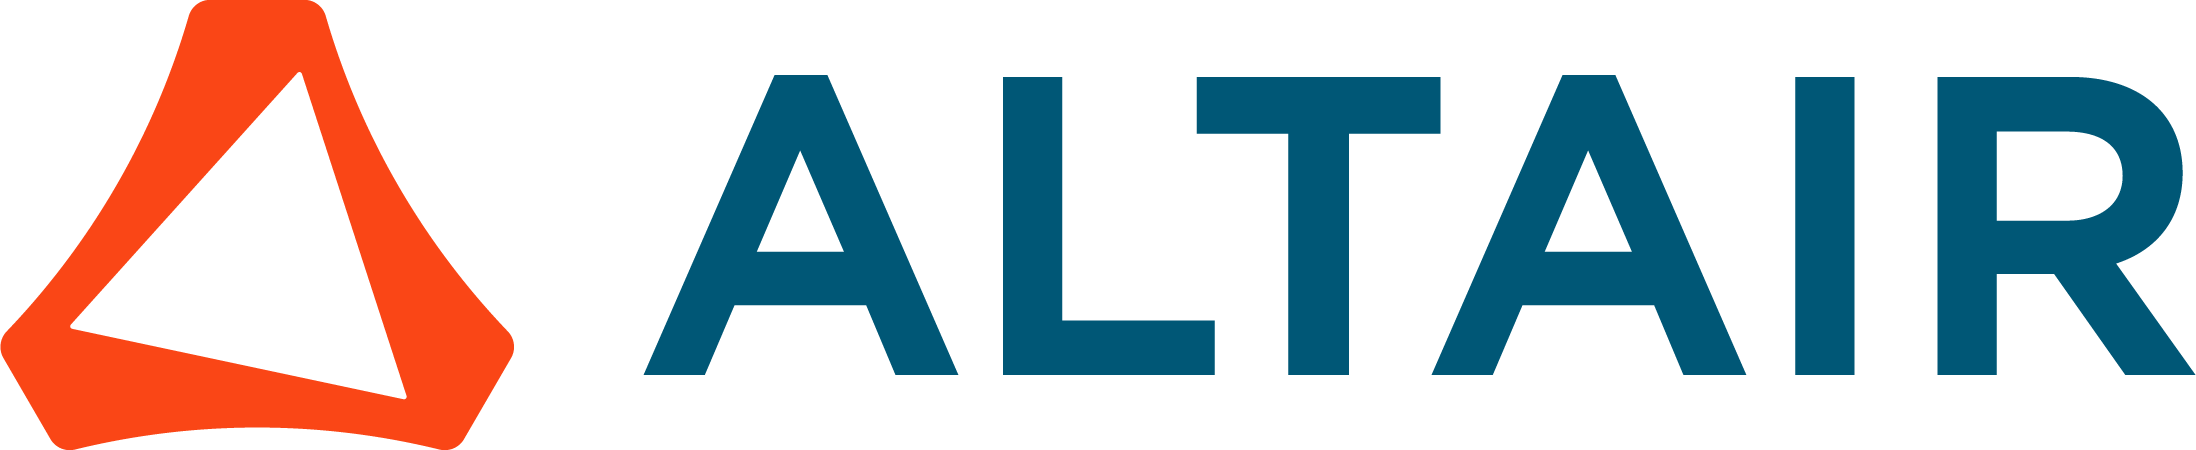 Altair logo.